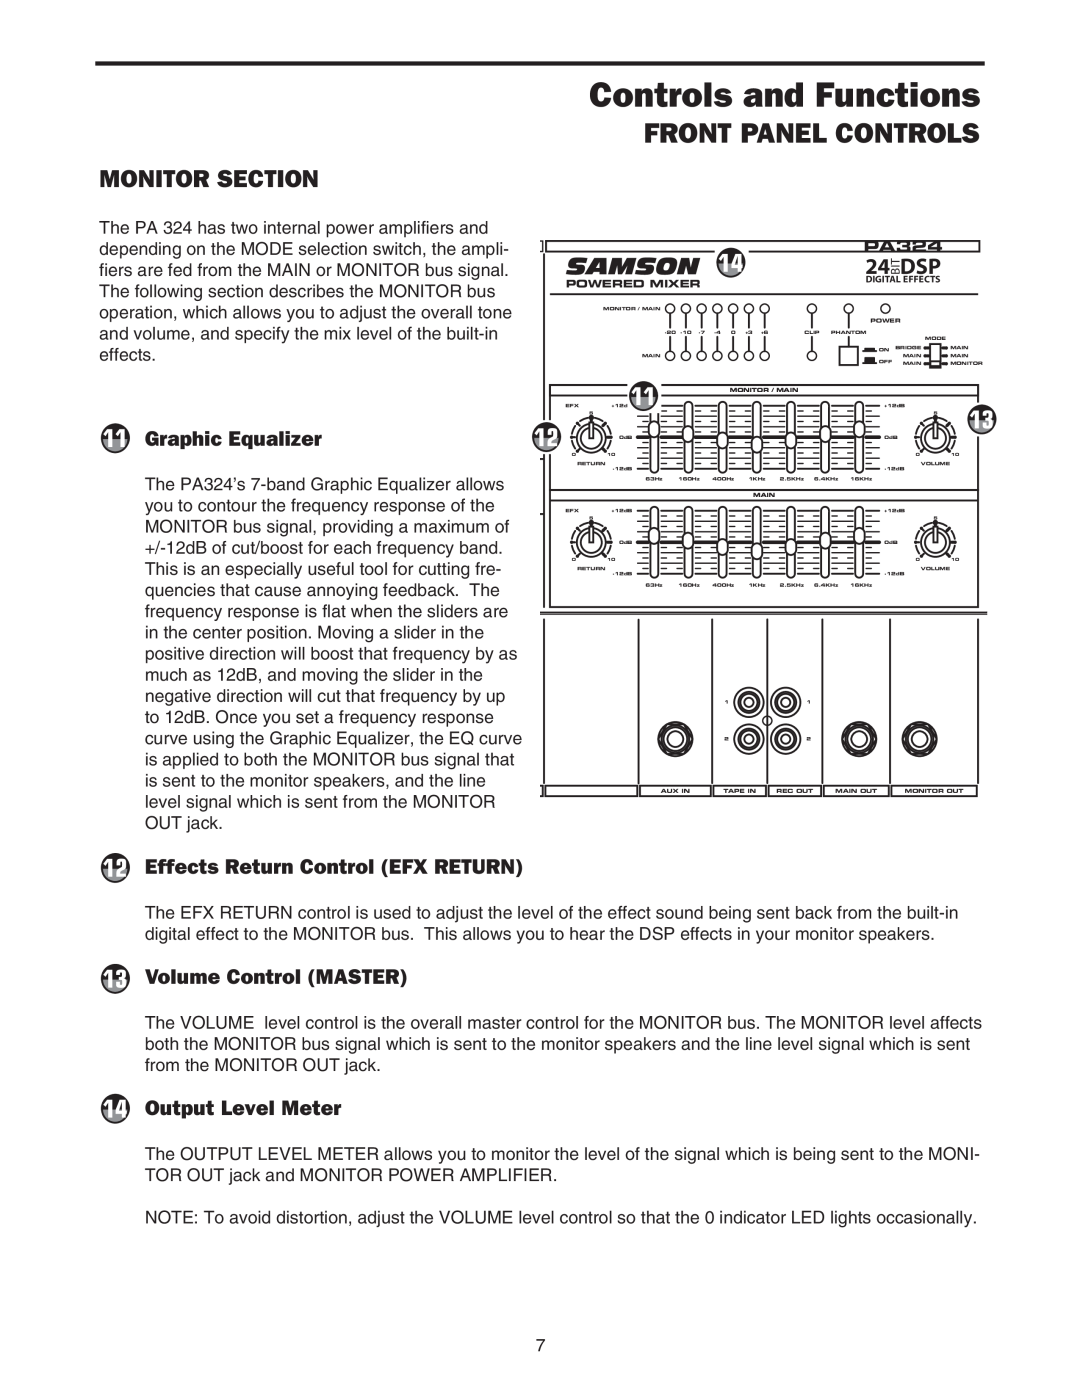 Samson PA324 Monitor Section, Samson, 11Graphic Equalizer, 12Effects Return Control EFX RETURN, 13Volume Control MASTER 